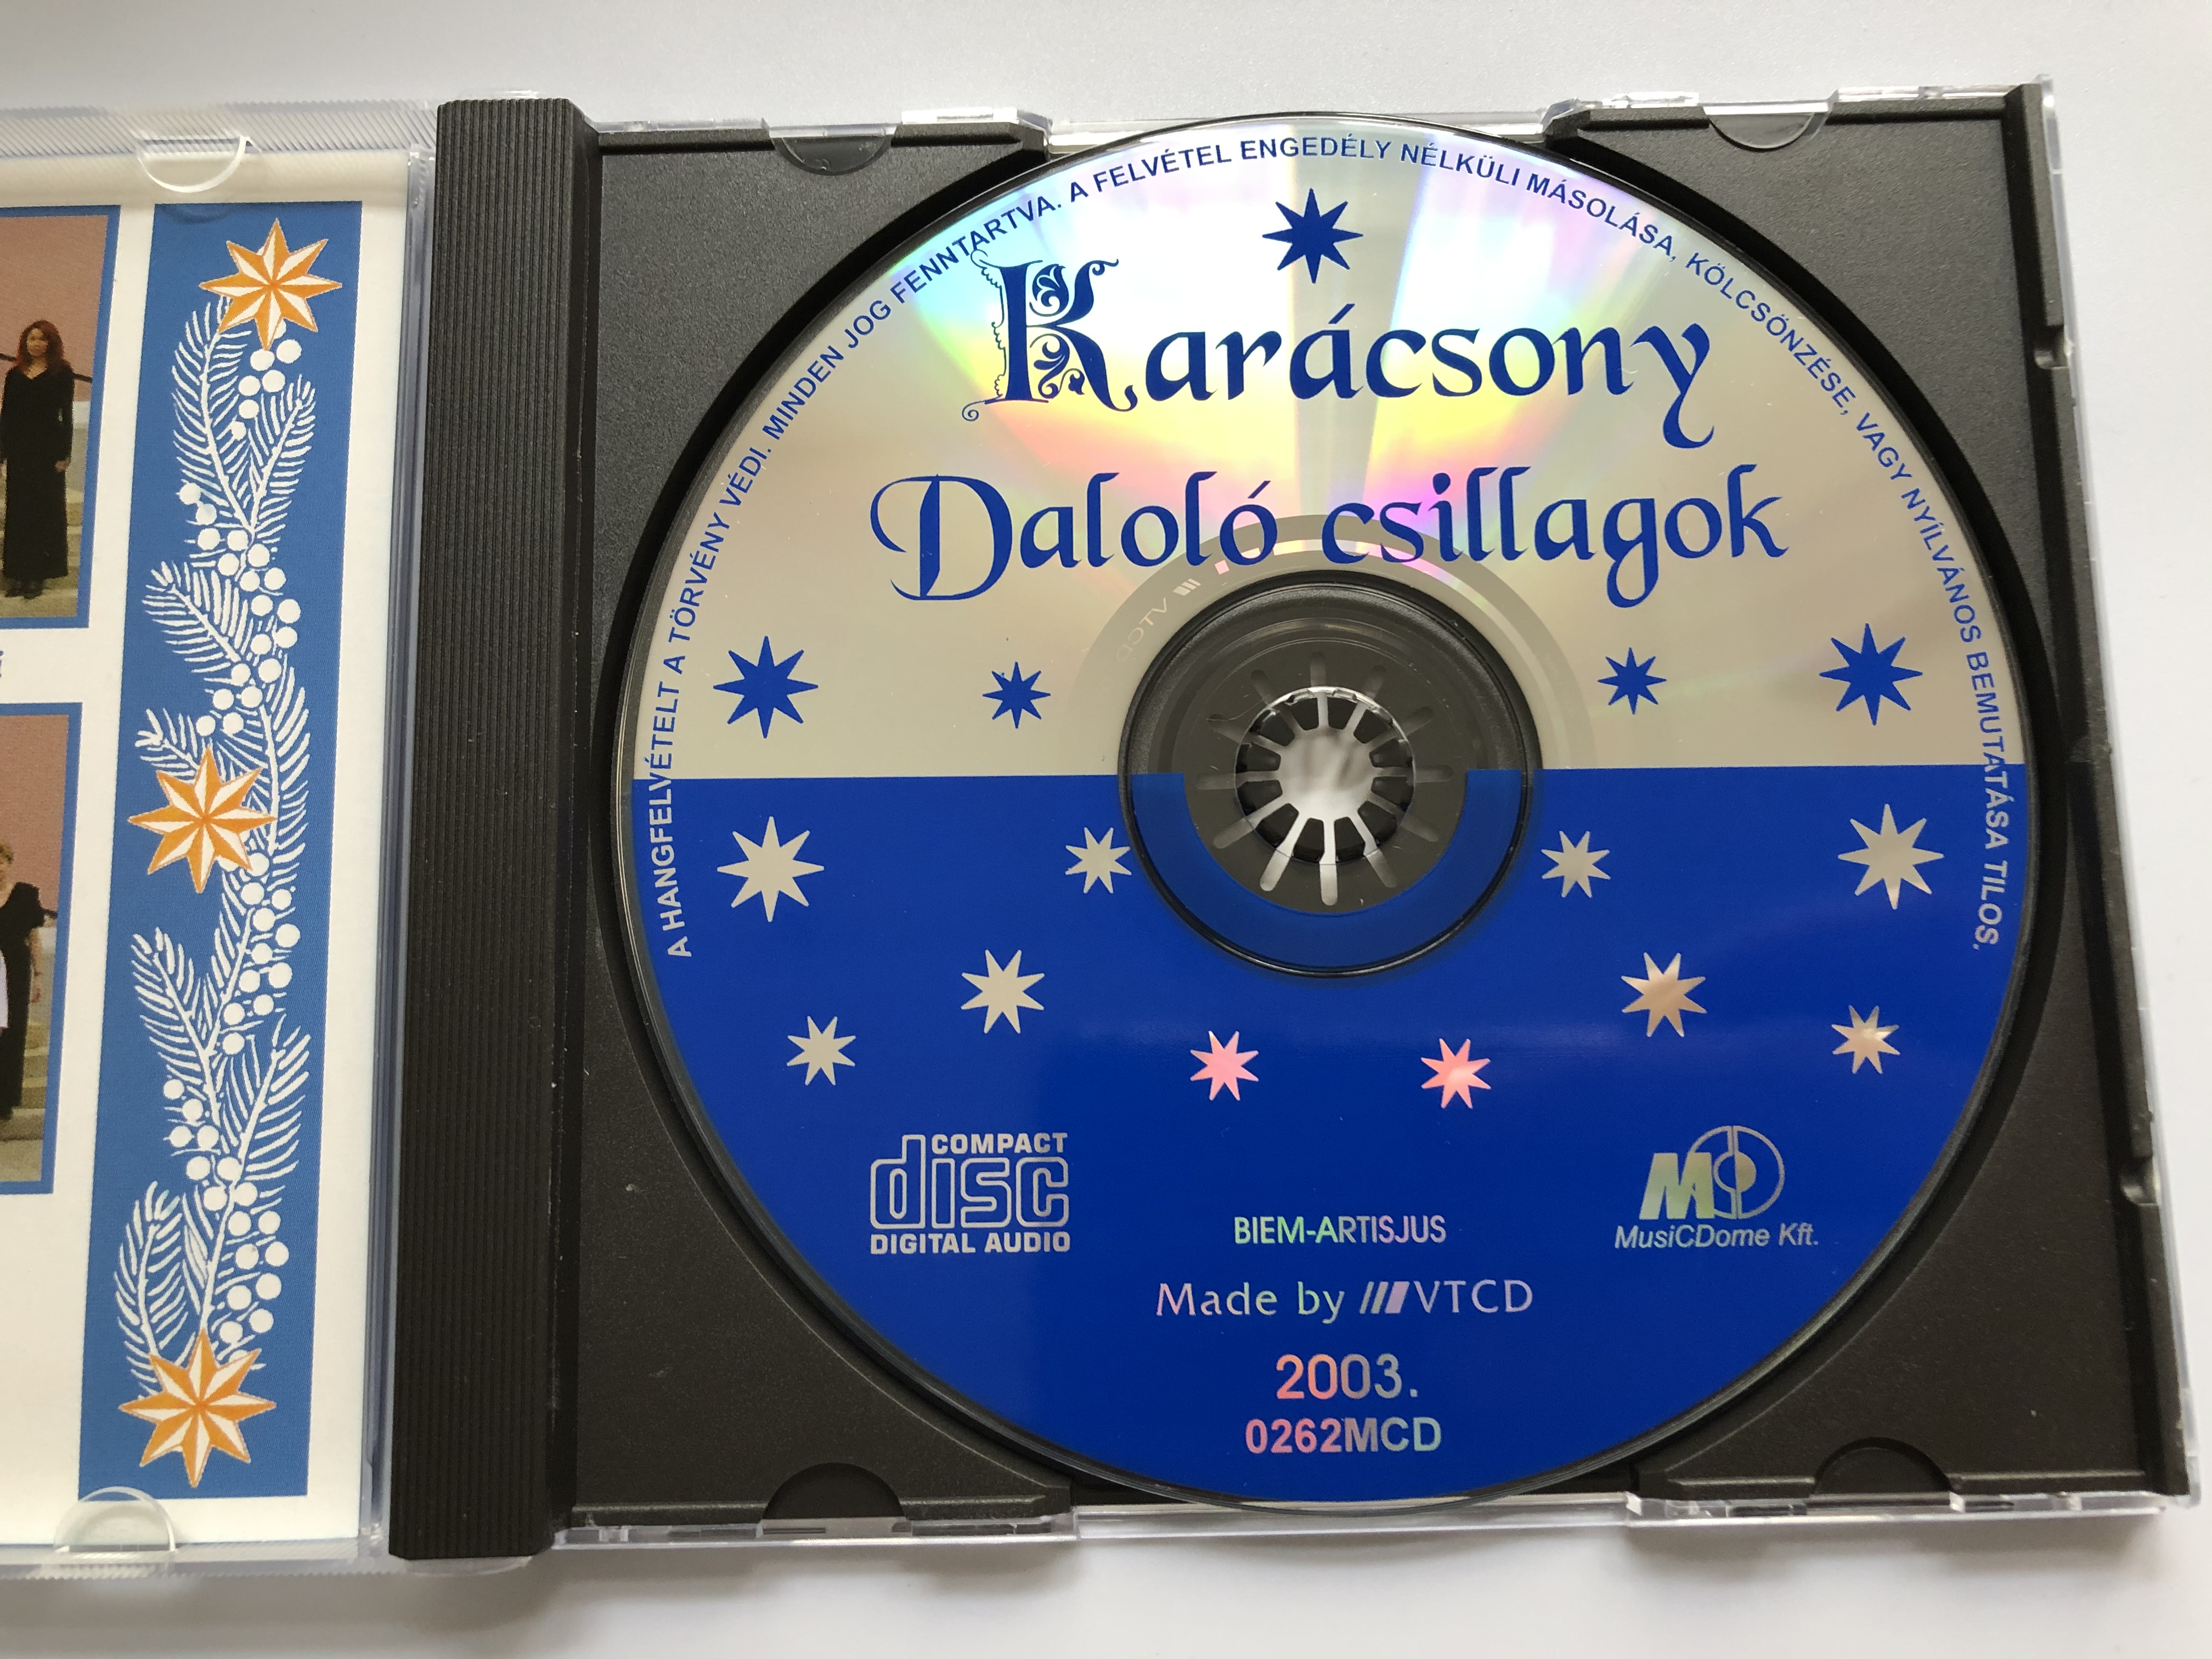 karacsony-dalolo-csillagok-a-legismertebb-dalok-musicdome-kft.-audio-cd-2003-0262mcd-3-.jpg